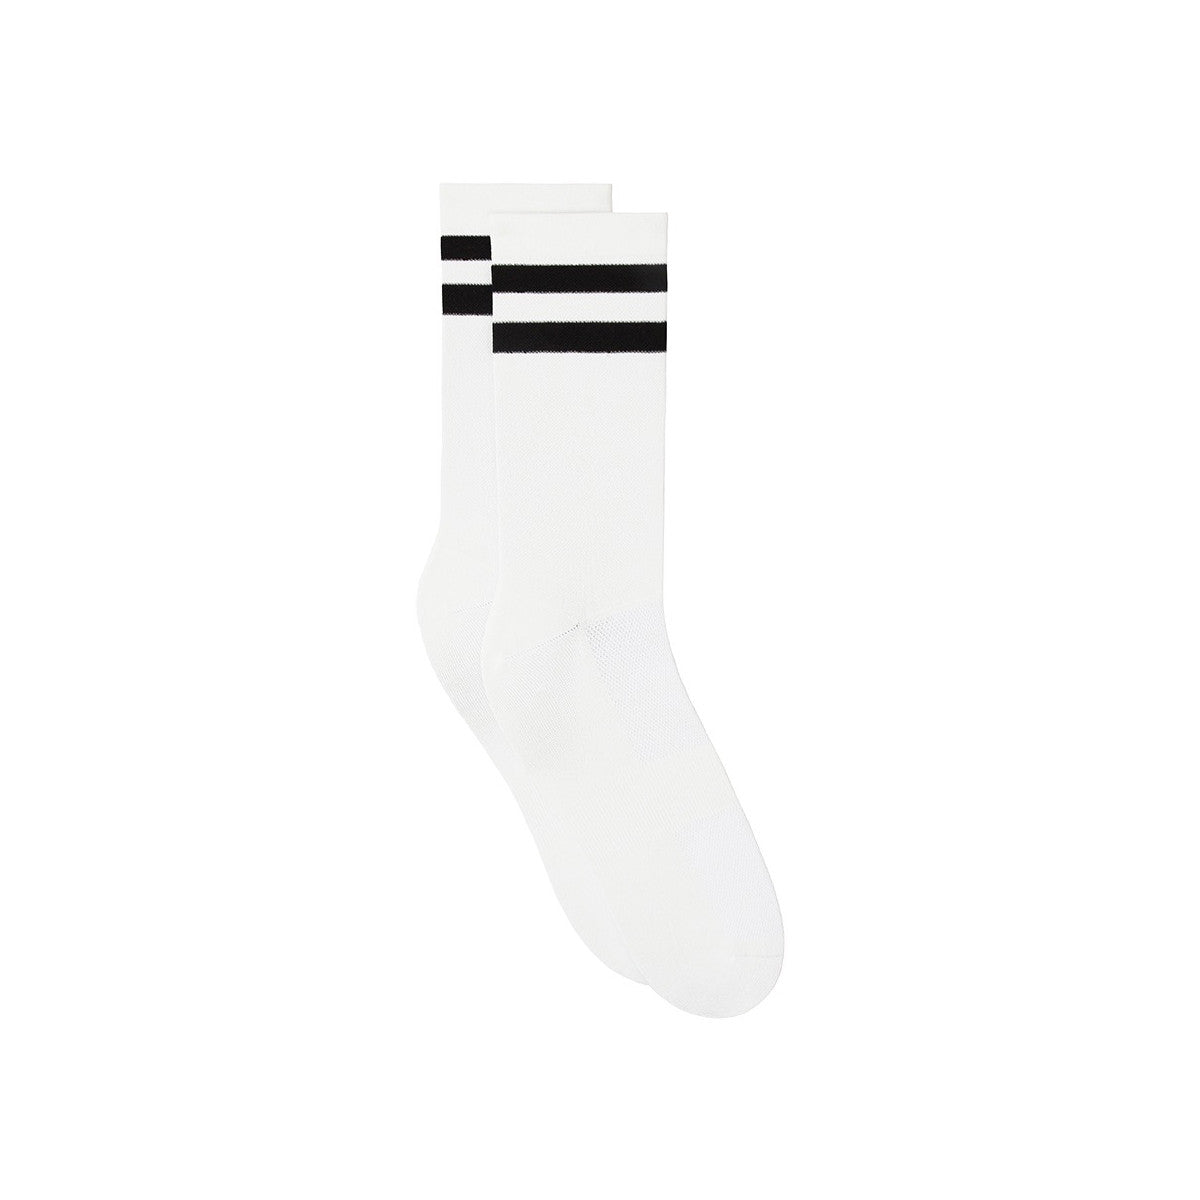 Reflective Team Socks / White